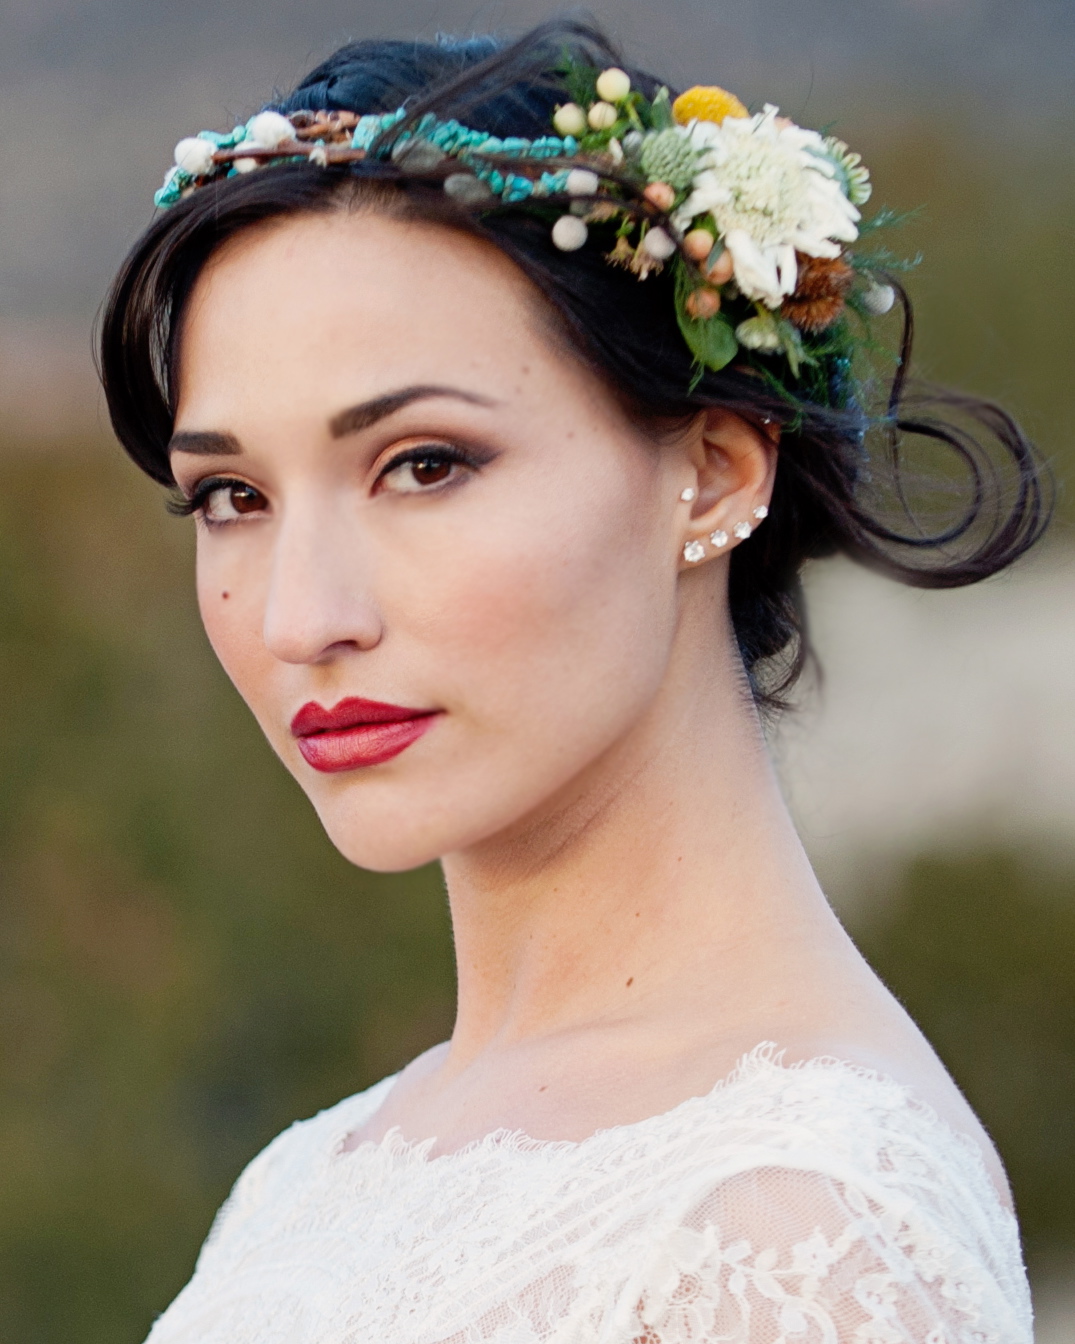 Hair+Makeup: Genica Lee, Makeup Artist Floral: Stephanie Yardman Floral Design Dress: Bridal Elegance By Darlene